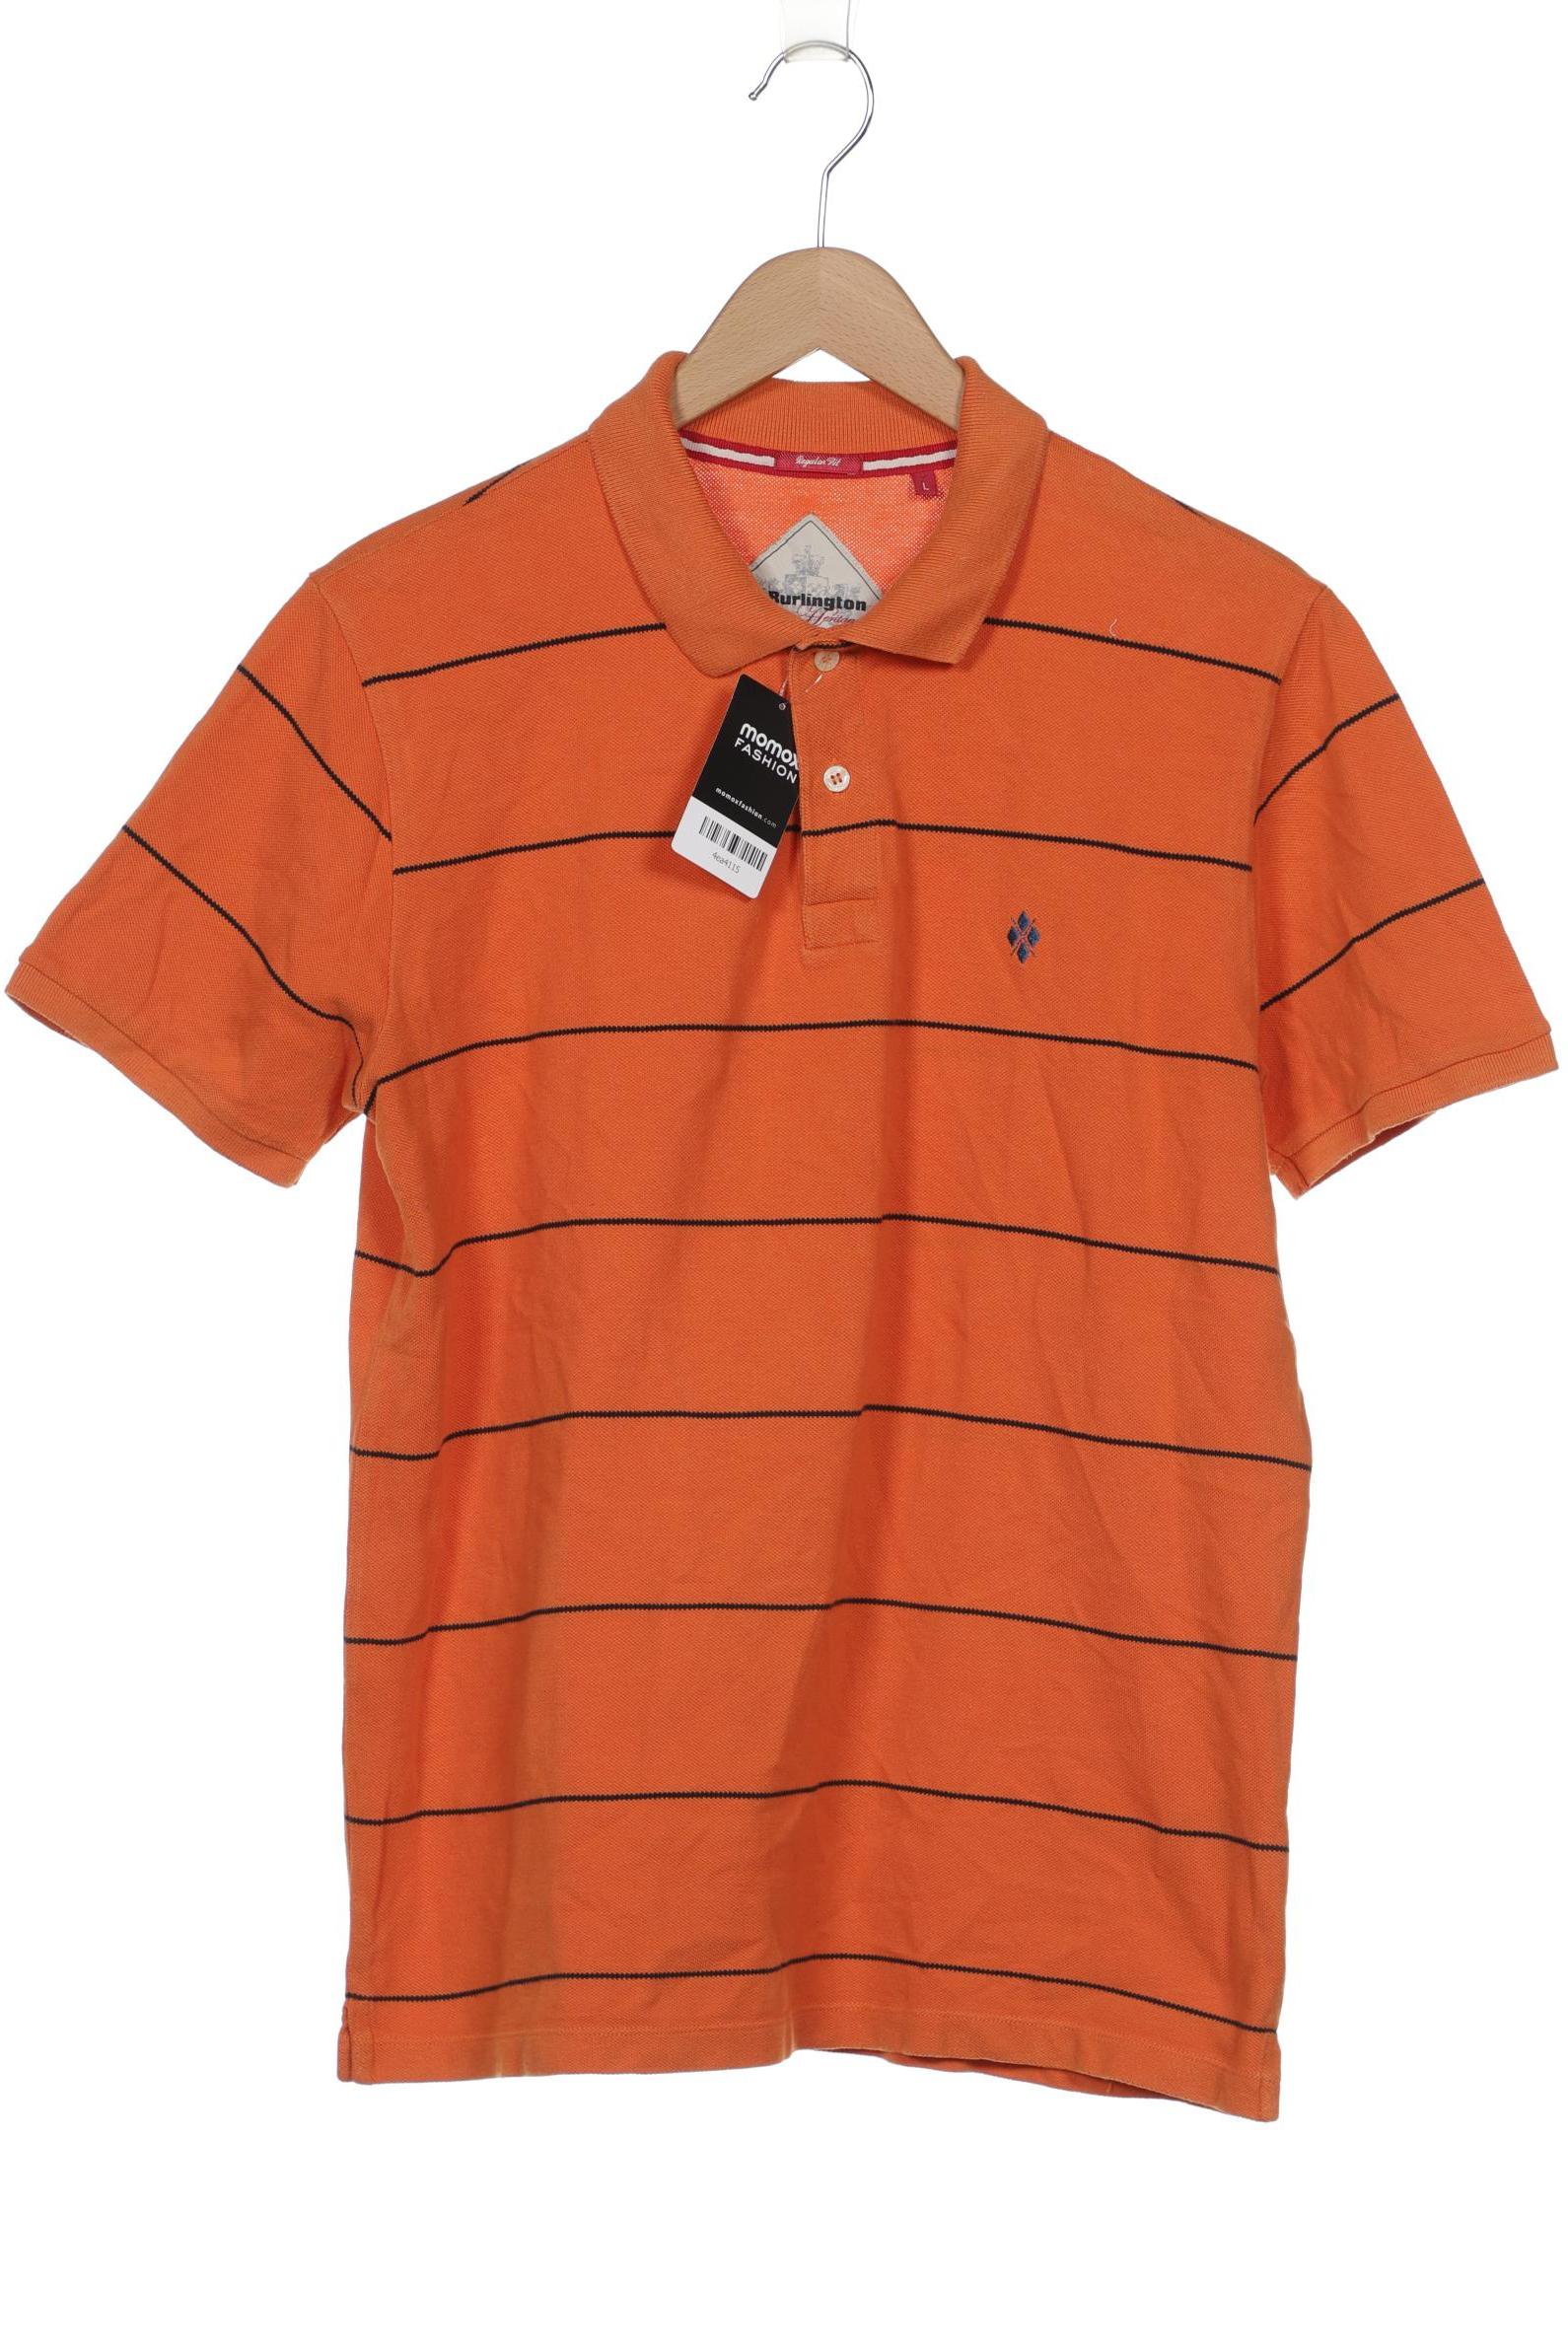 Burlington Herren Poloshirt, orange